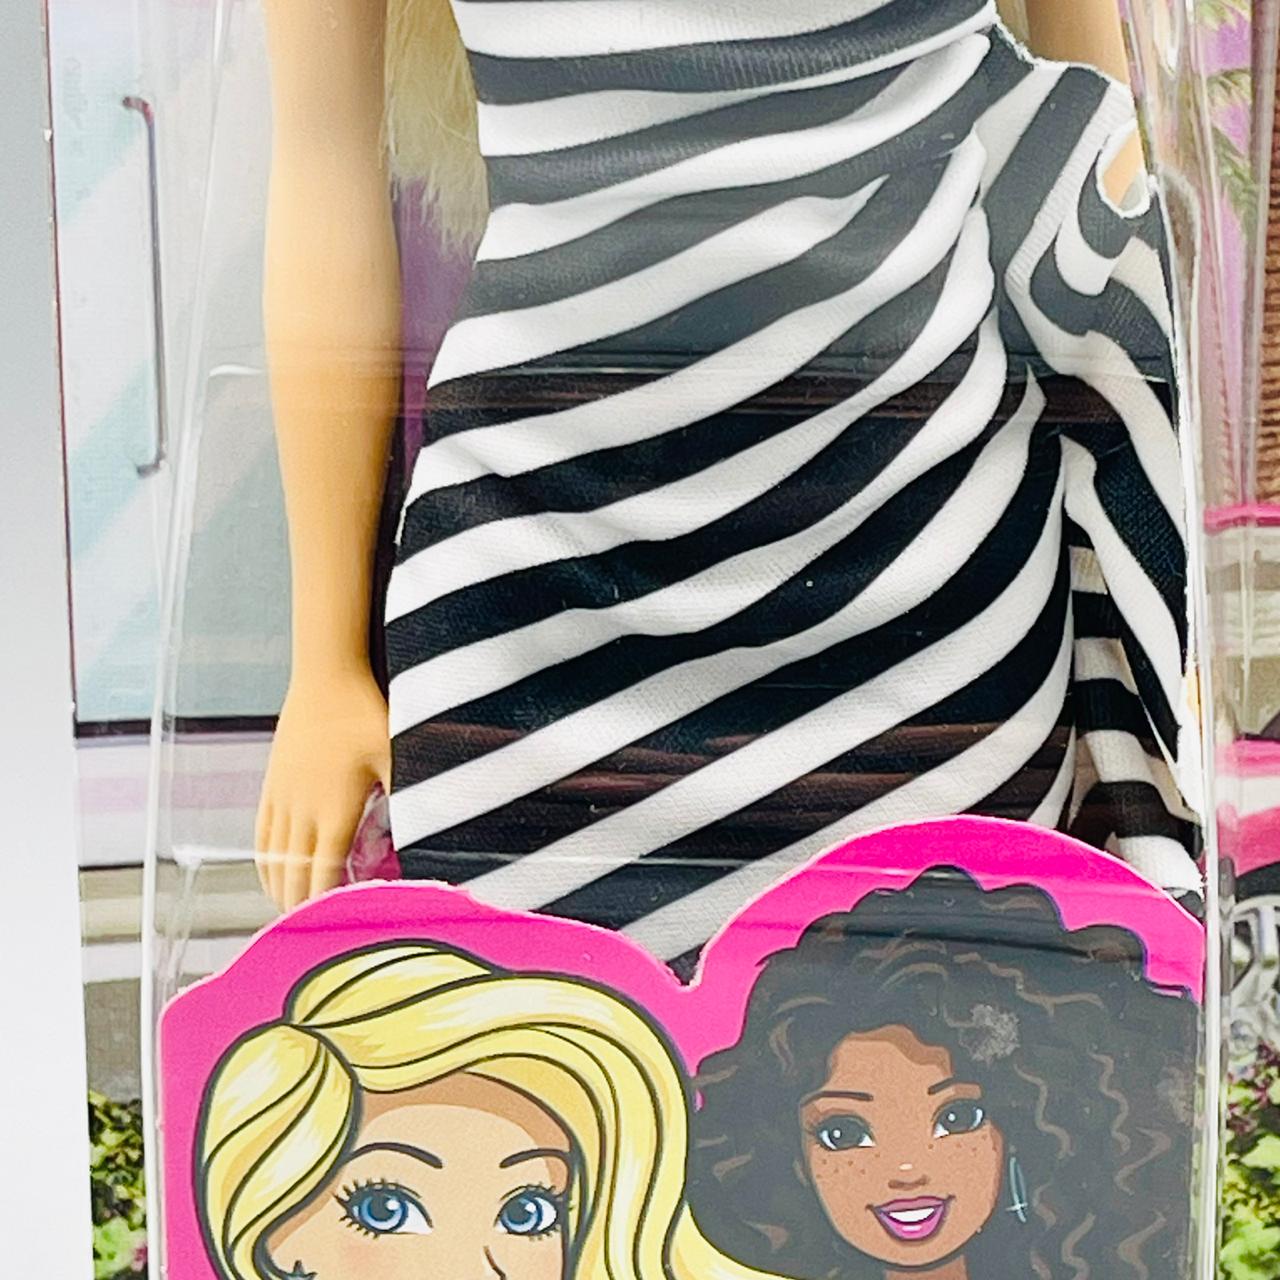 MATTEL Barbie Doll with Black & White Dress